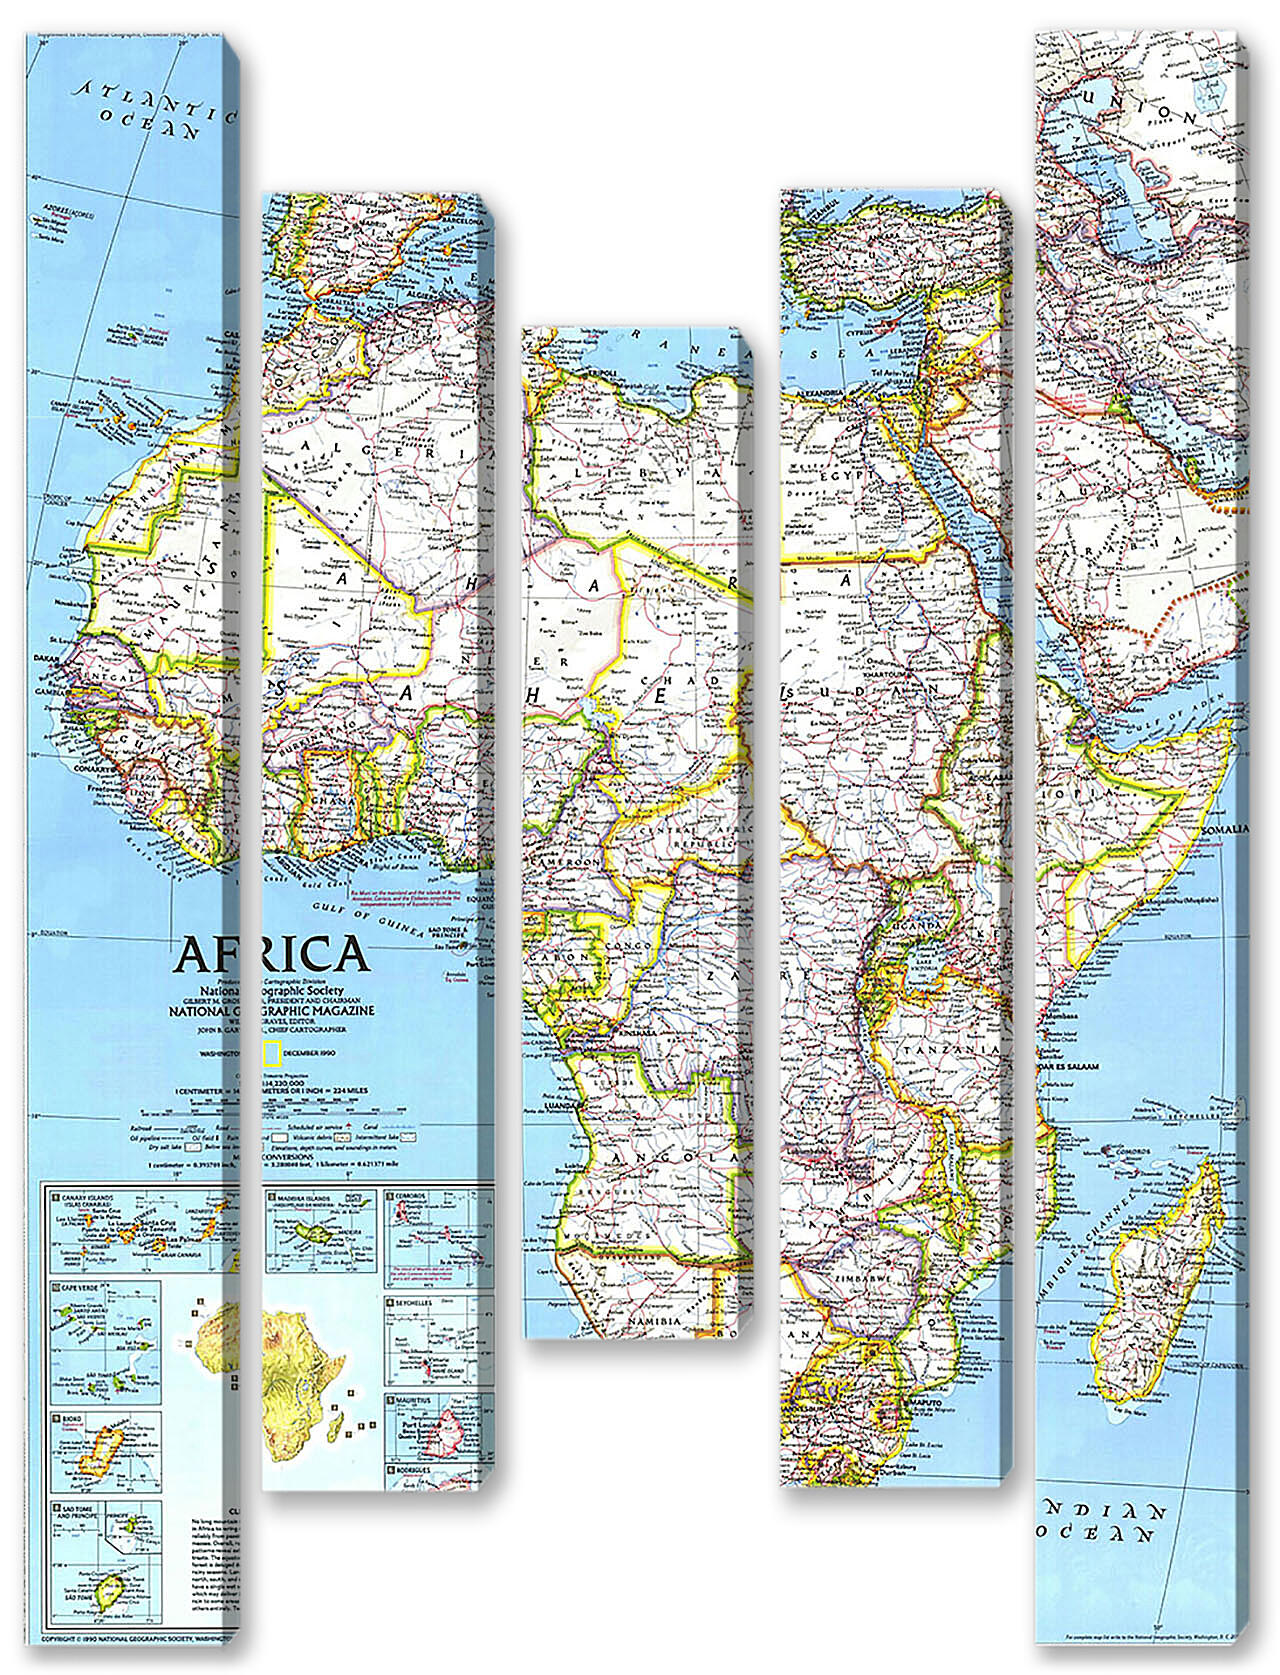 Модульная картина - Карта Африки
